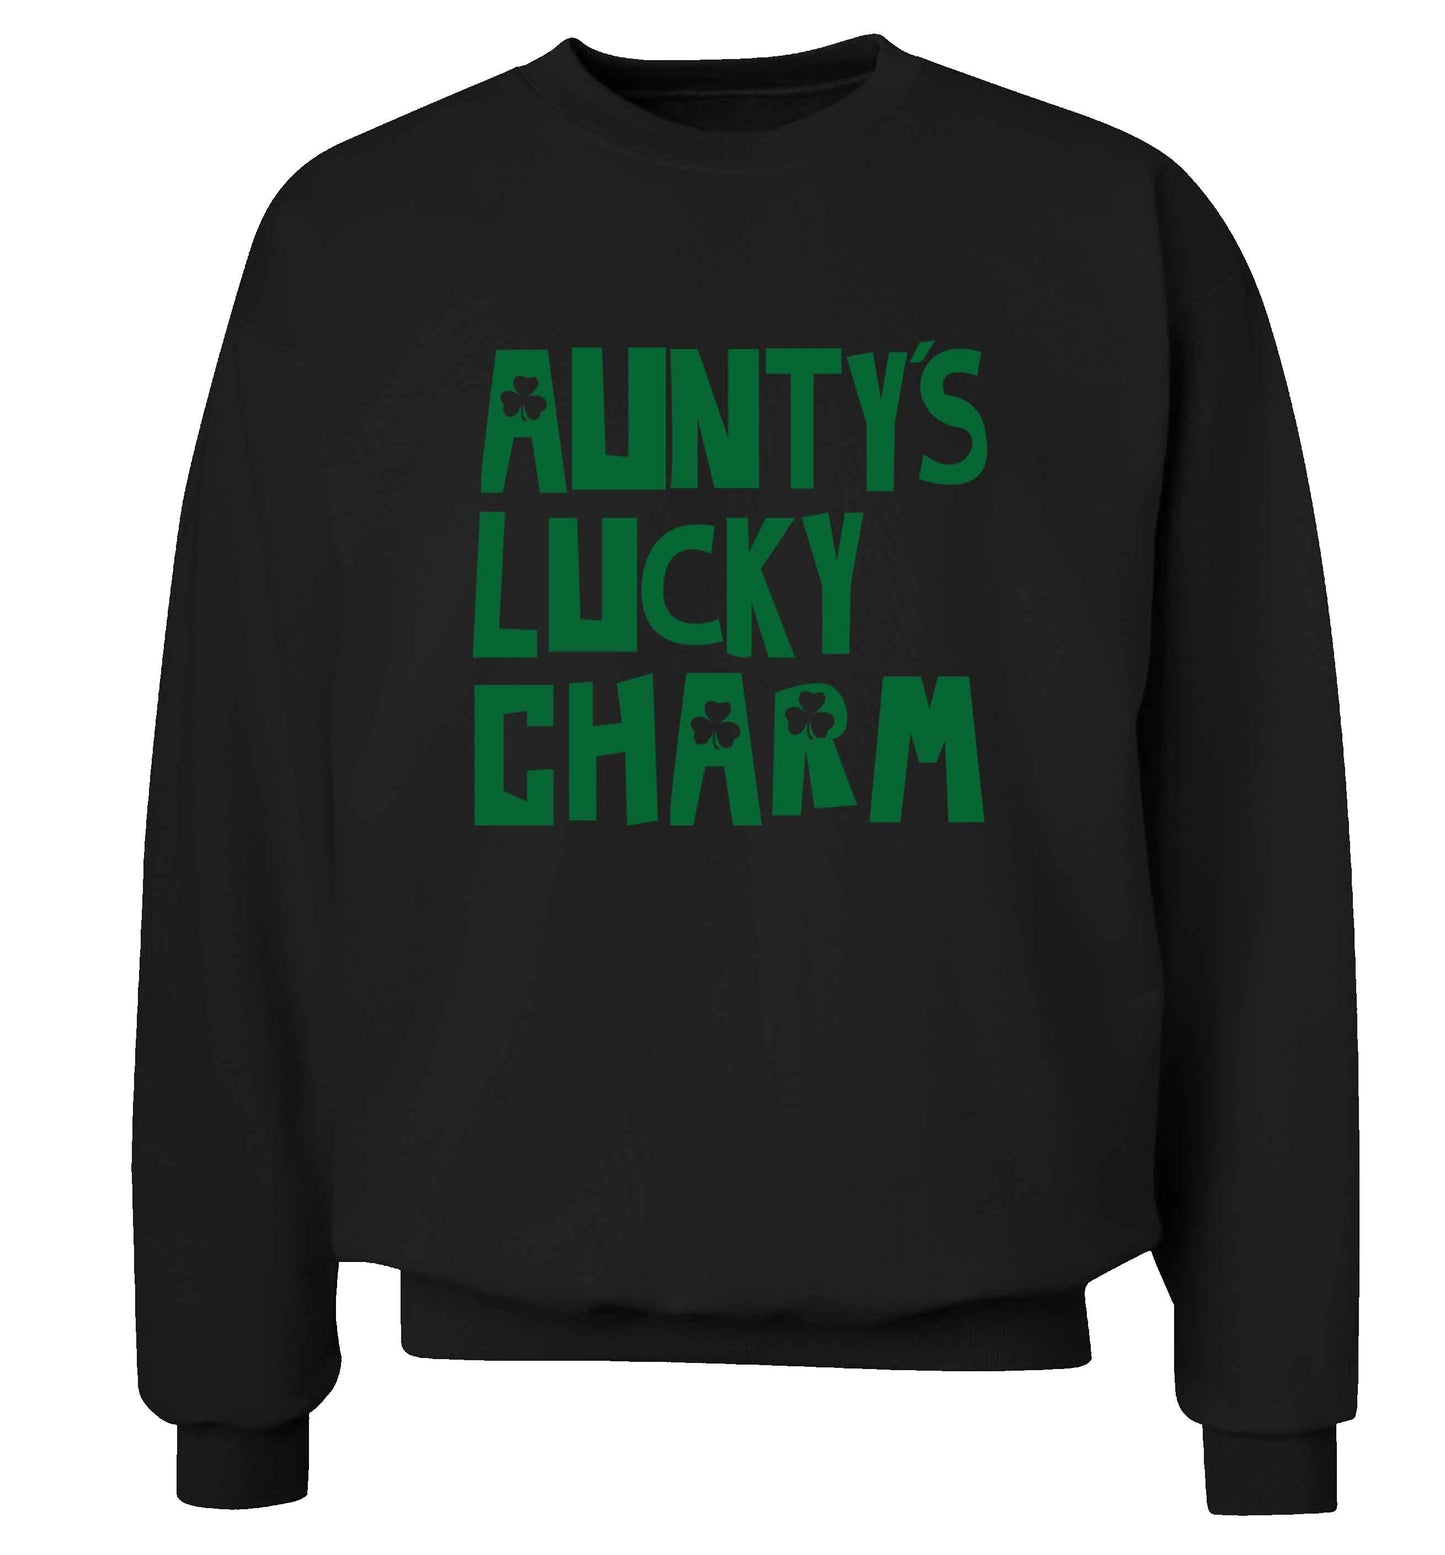 Aunty's lucky charm adult's unisex black sweater 2XL